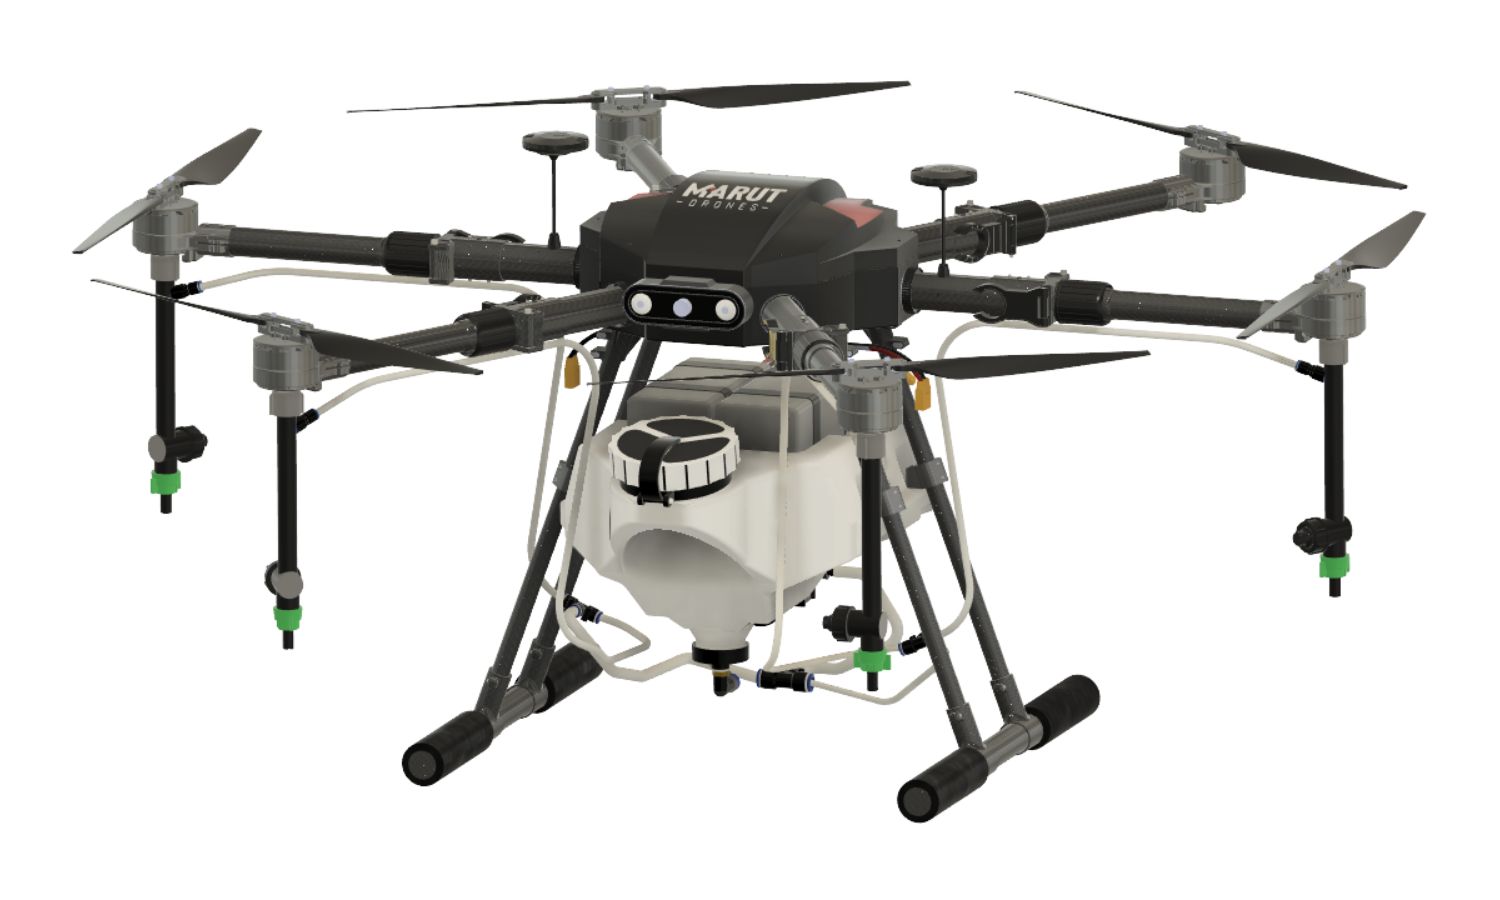 Marut Drones bags FTCCI